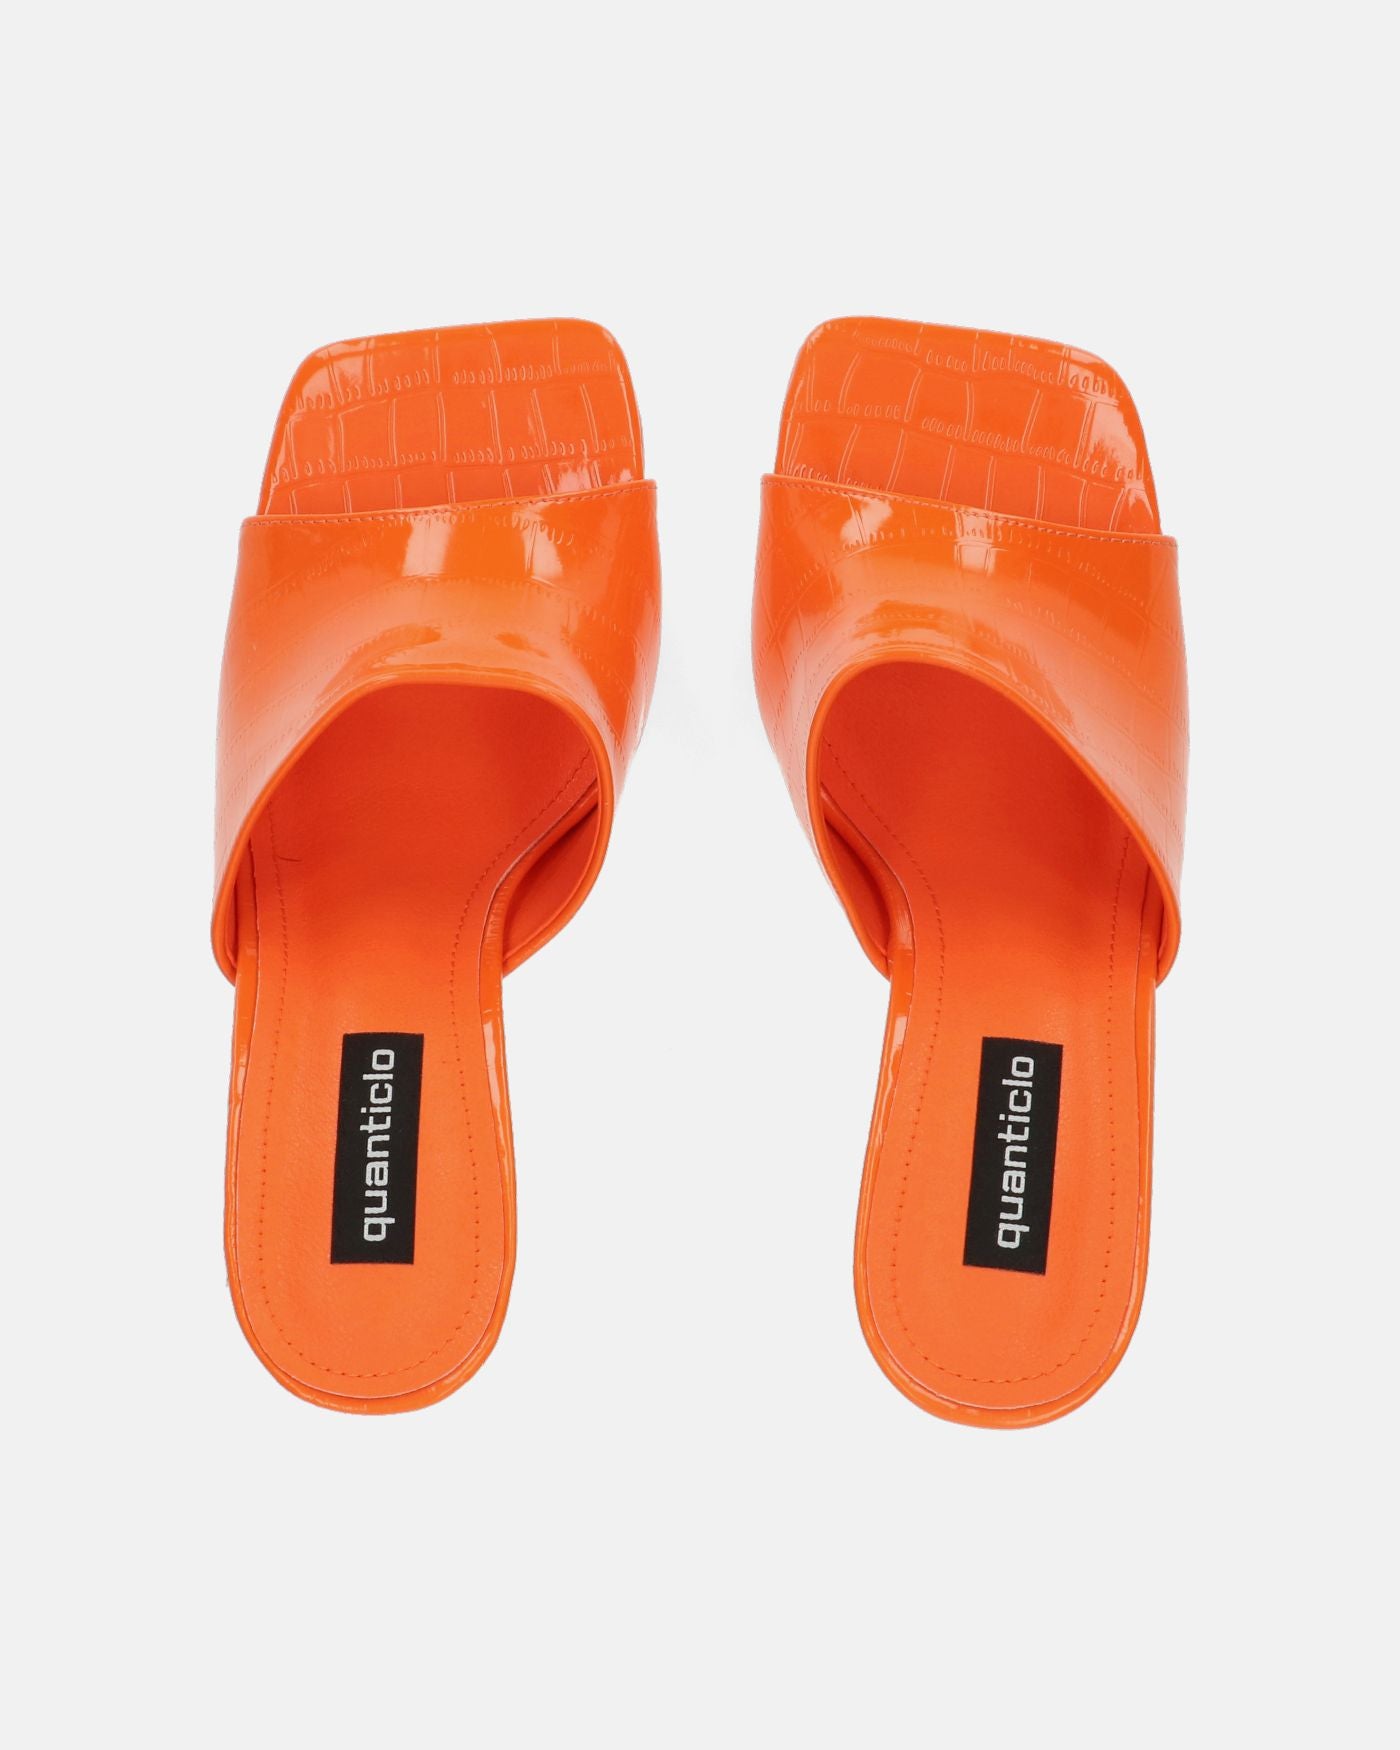 MARGHERITA - wedge sandals in glassy orange crocodile